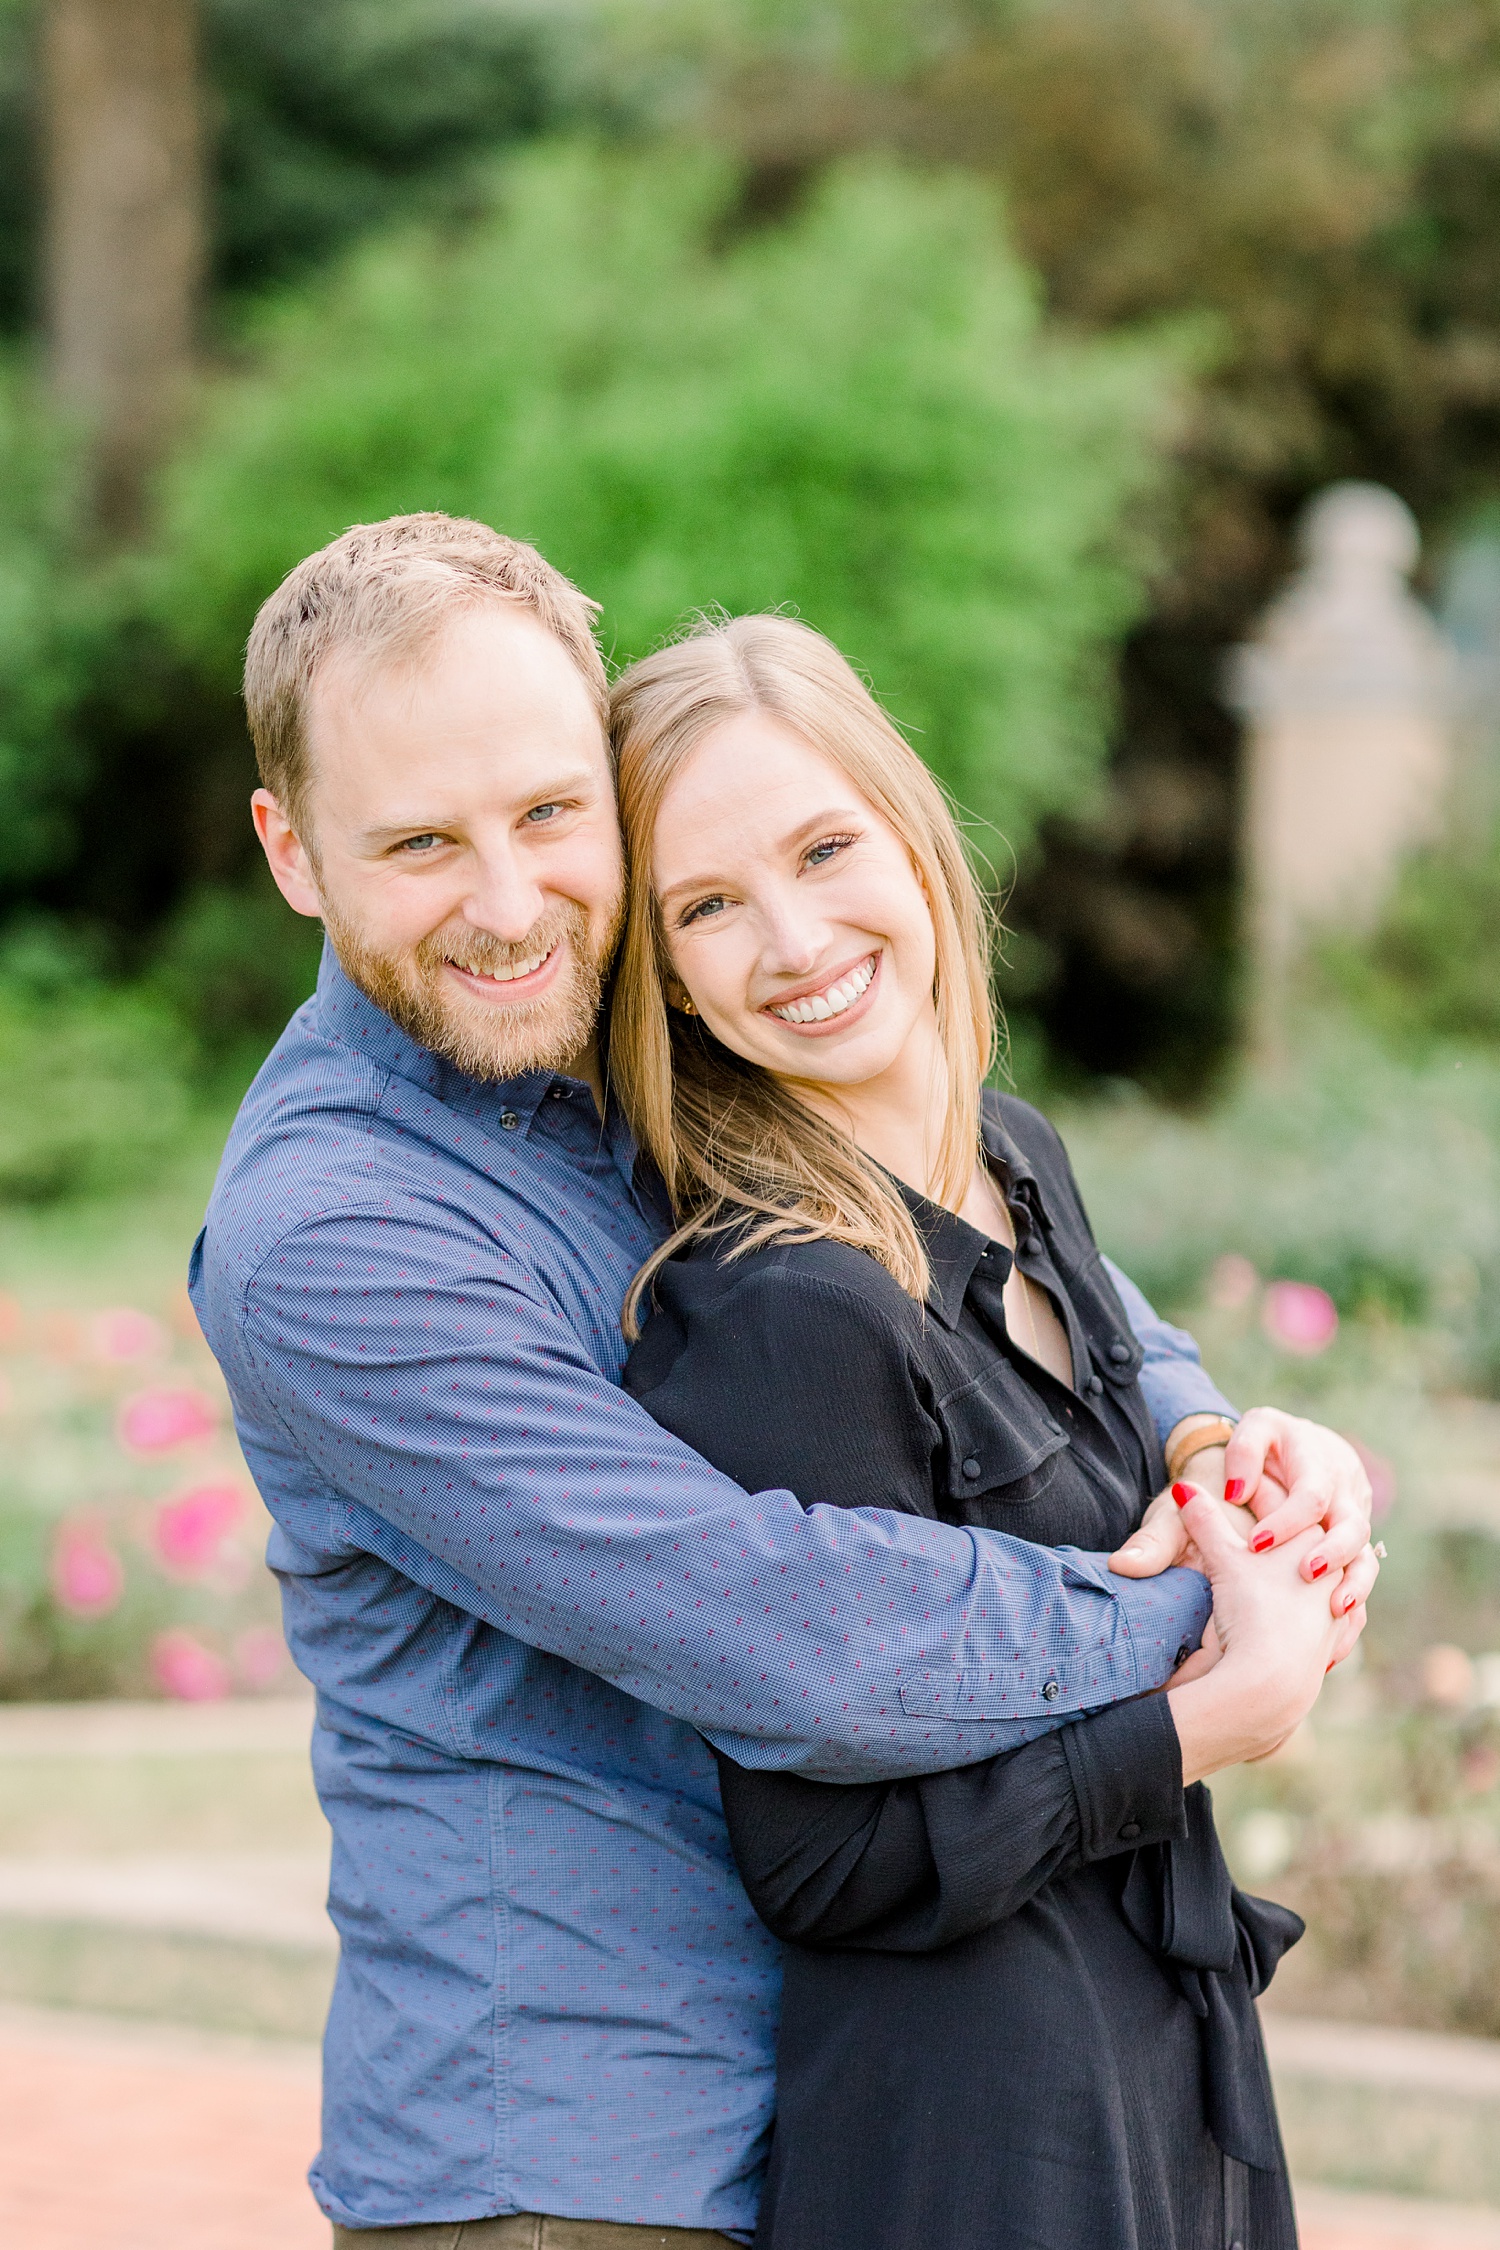 Alabama couple hugs in garden during engagement photos